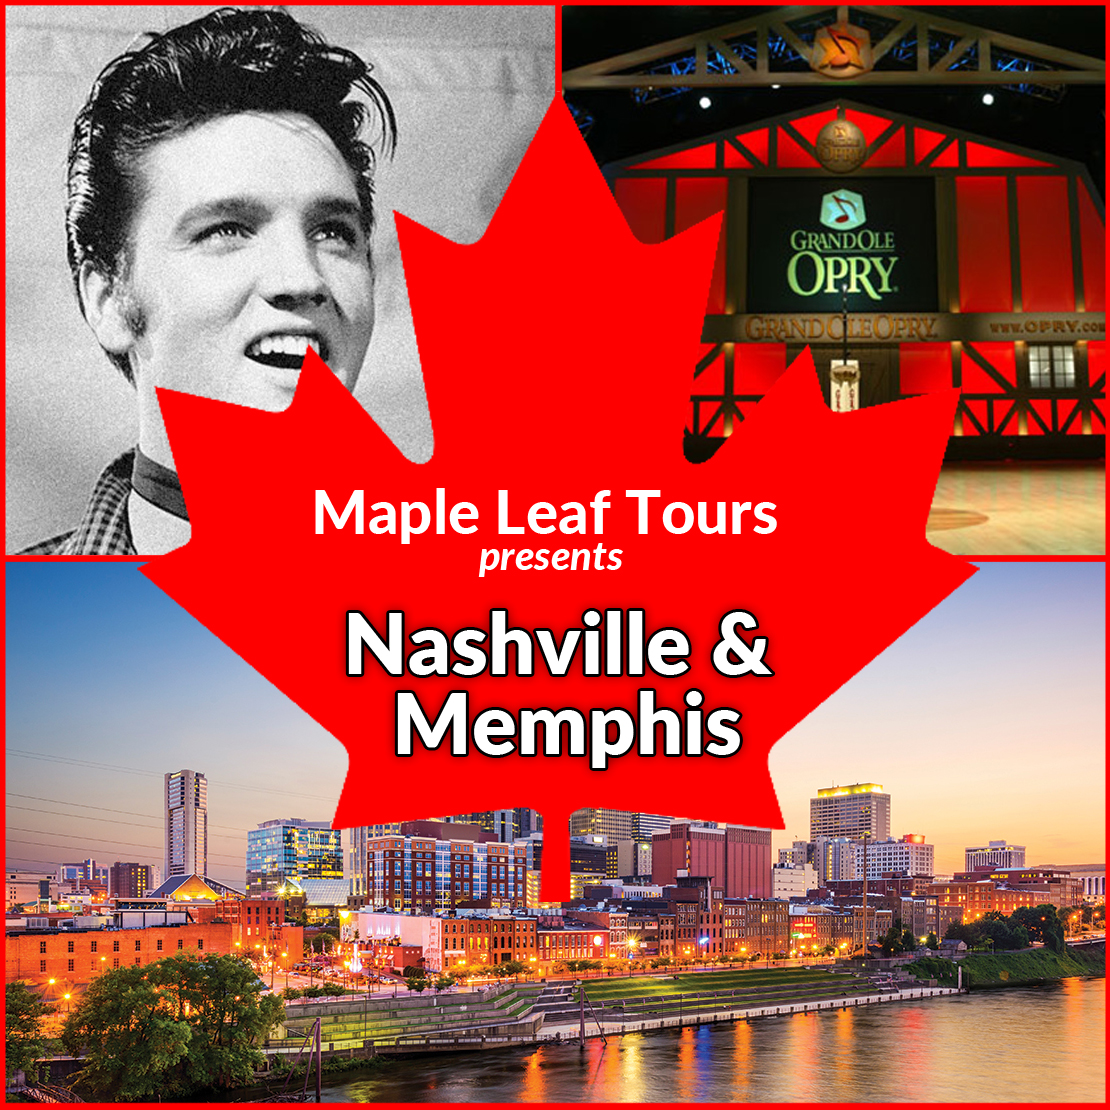 Nashville & Memphis: Traditional May